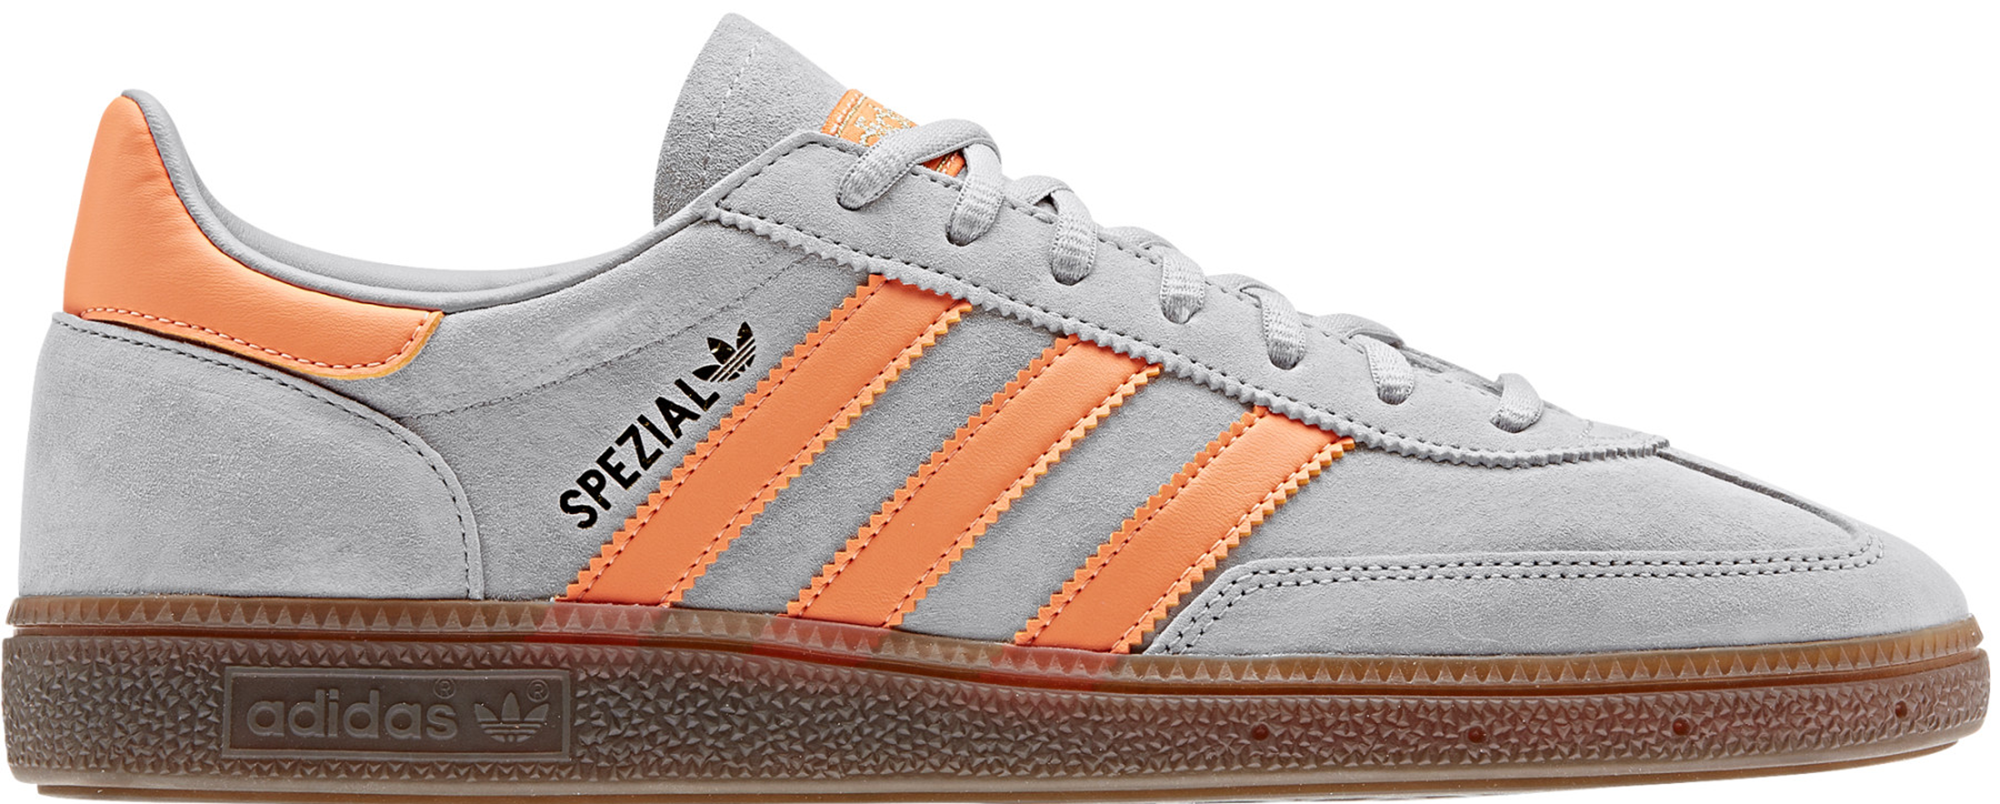 adidas spezial grey and orange